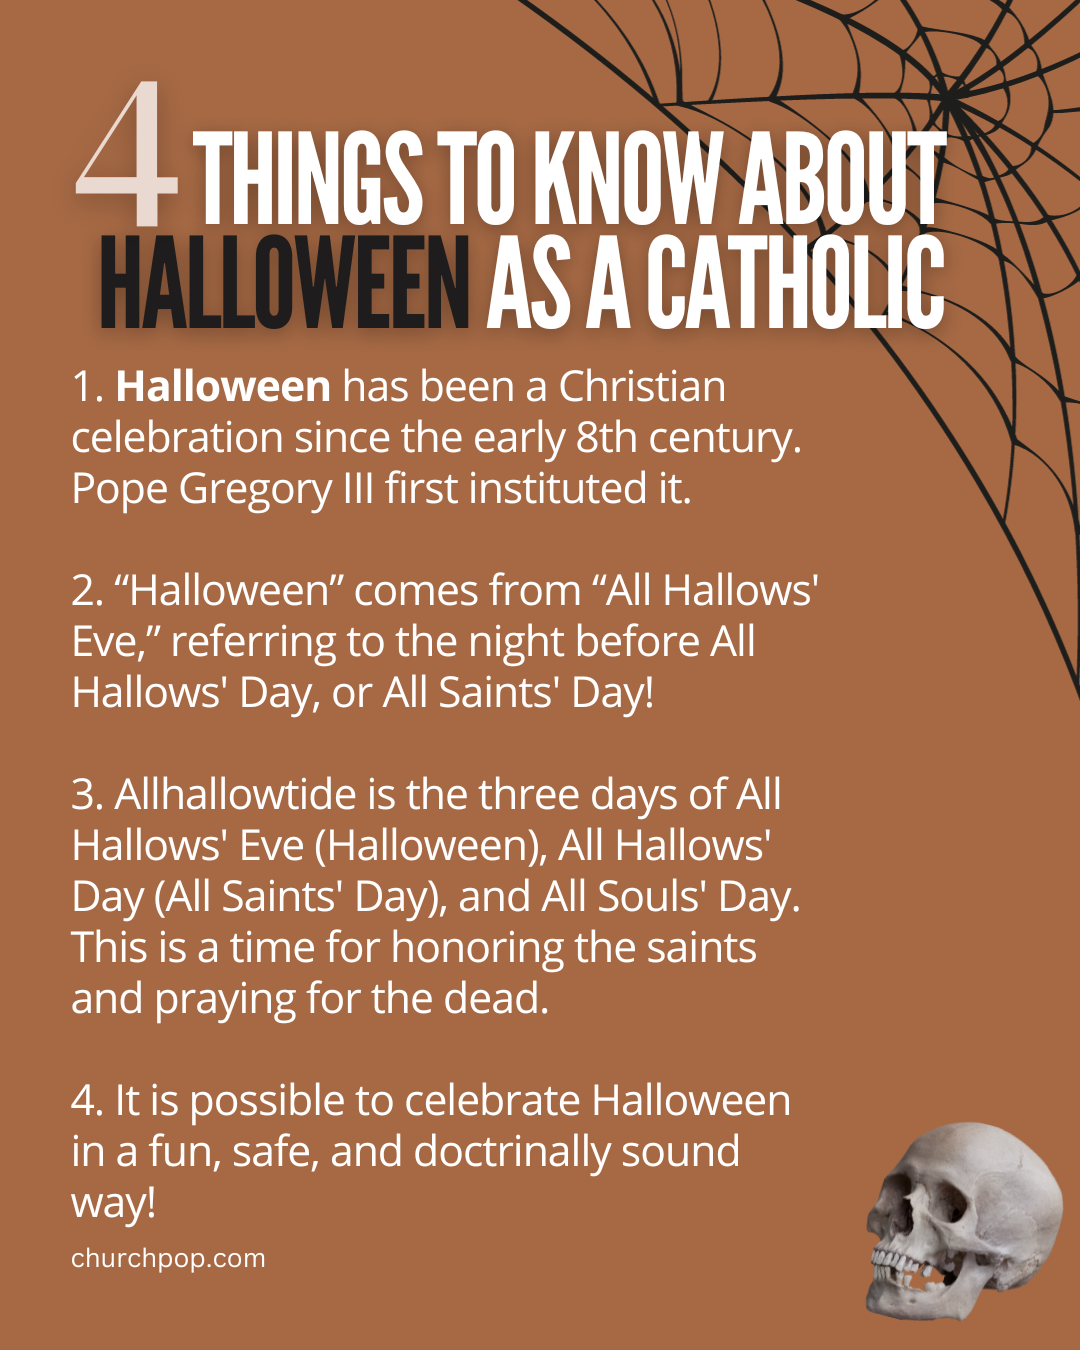 Can Catholics Celebrate Halloween?